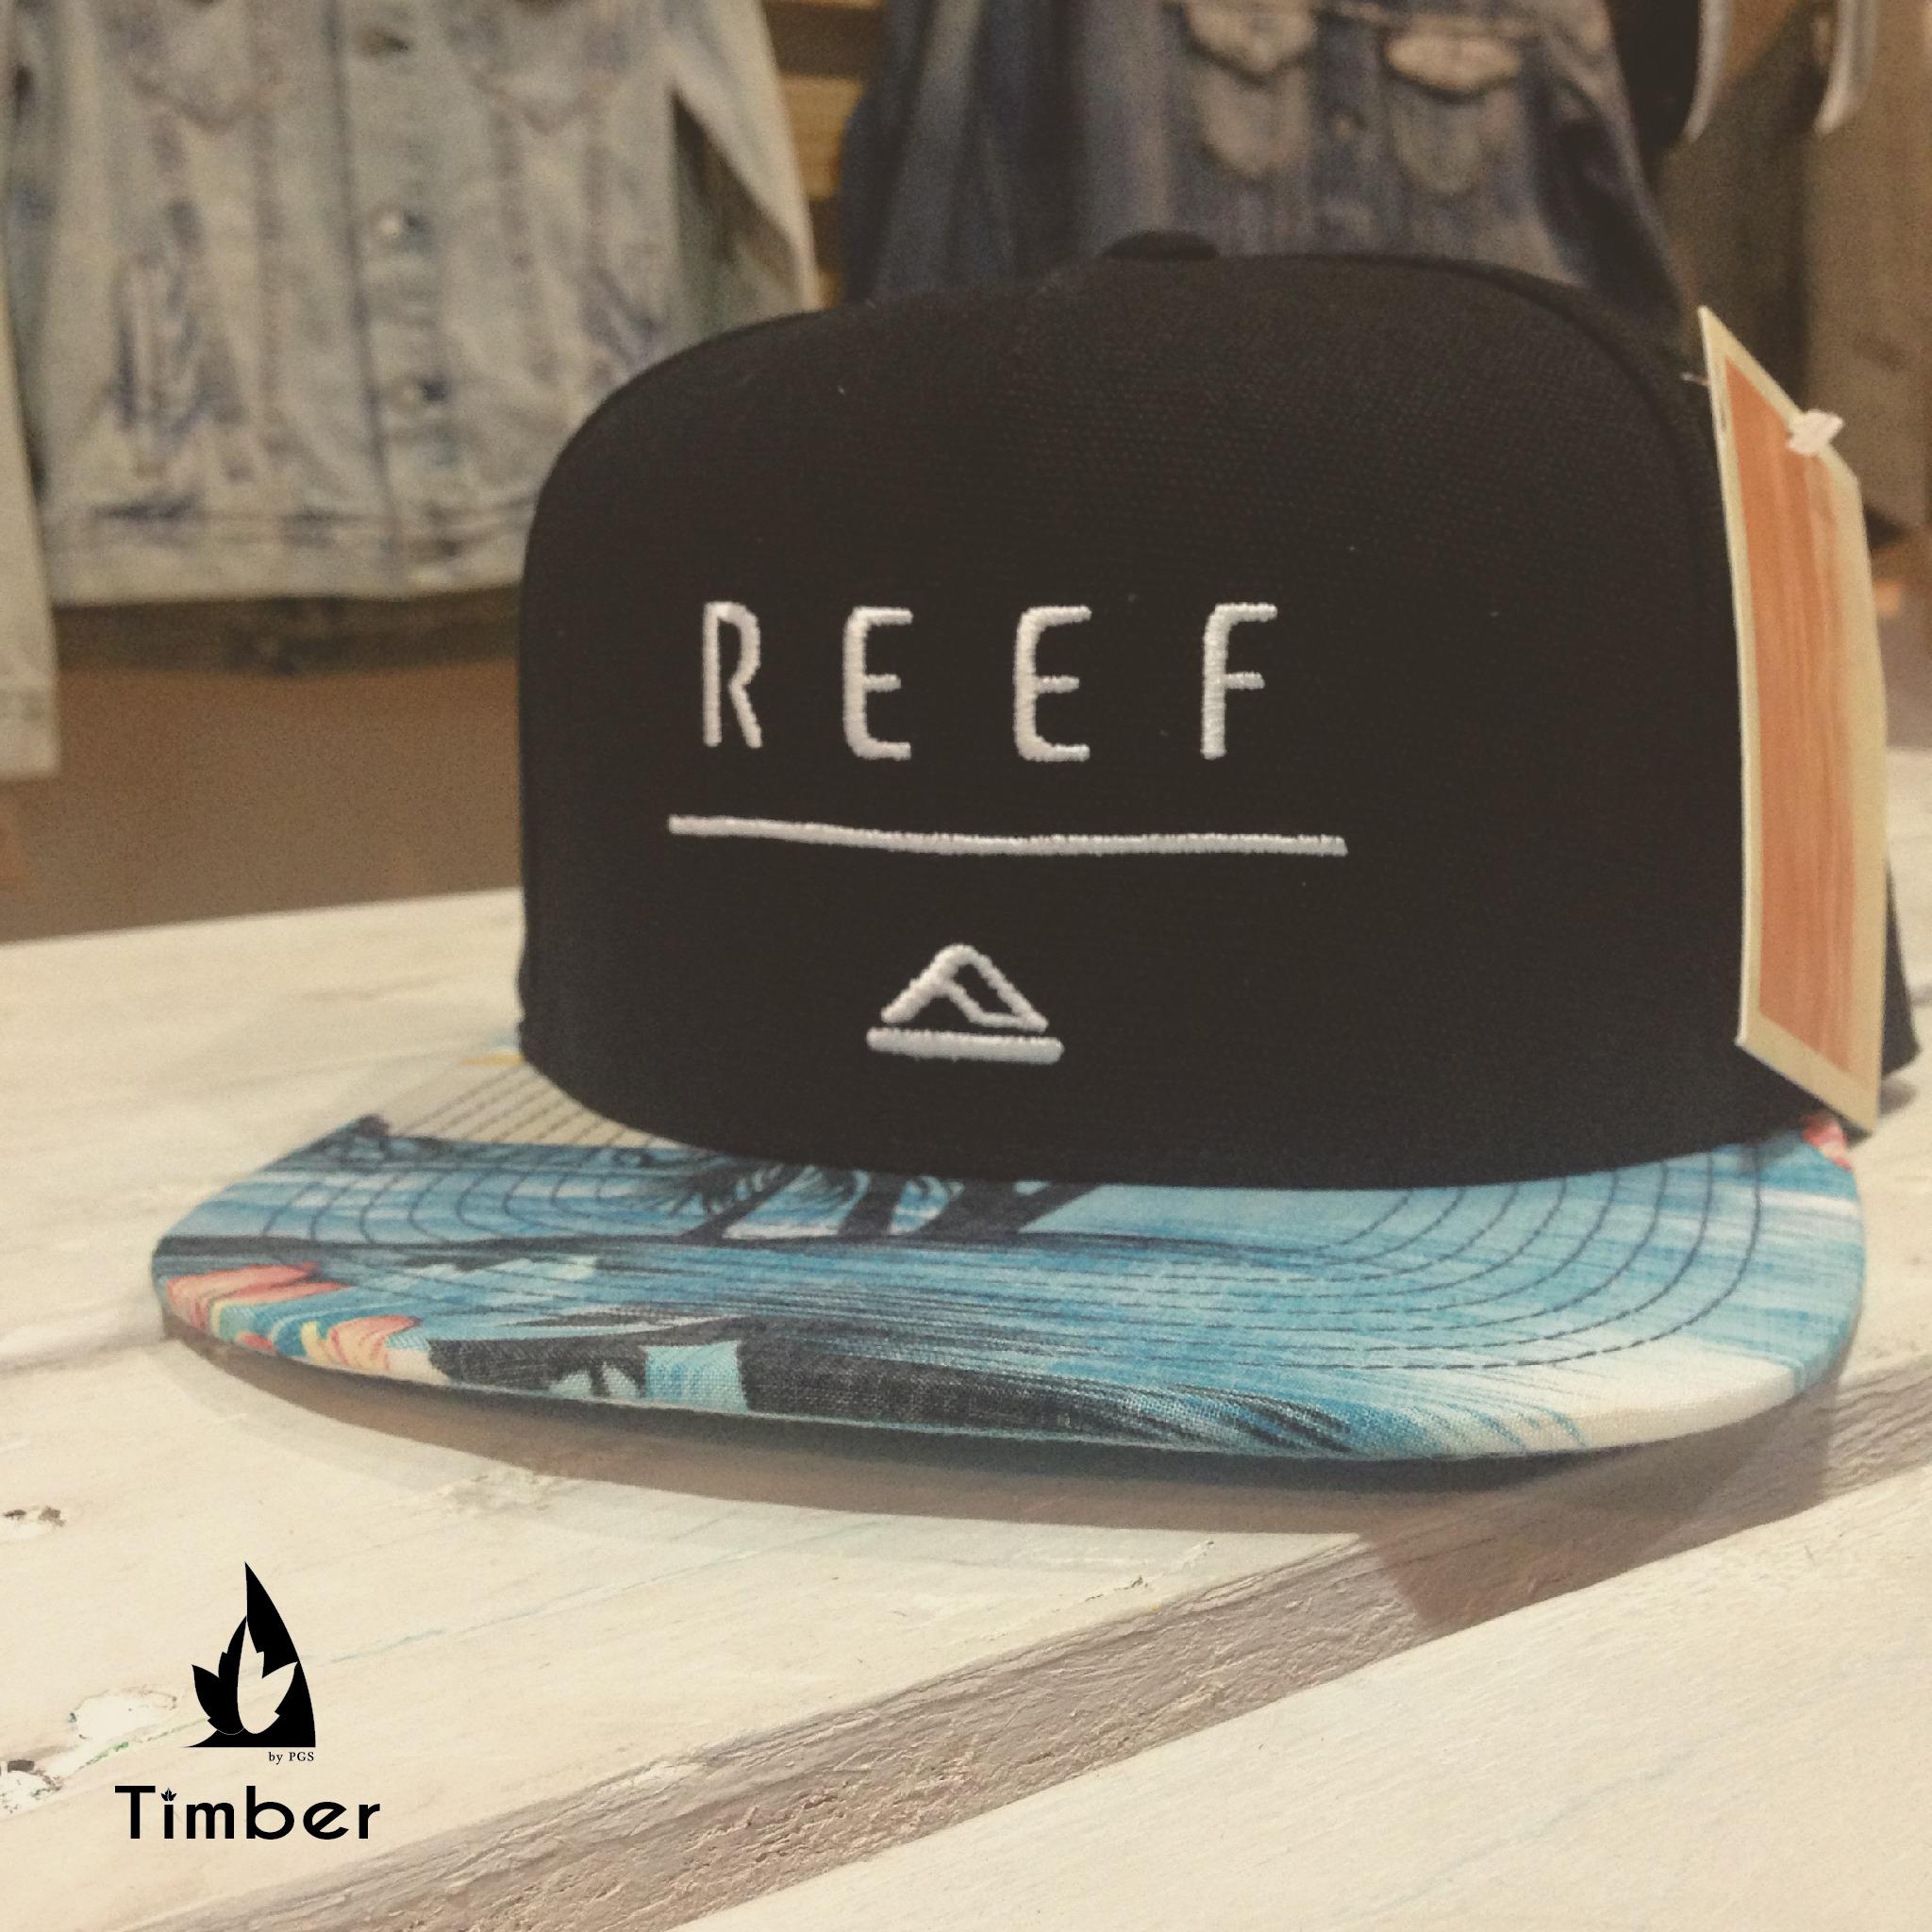 Meyella Embotellamiento Detener Timber on Twitter: "Gorras Reef con el mejor precio solo aqui en  @TiendaTimber #LivingTimber #Timber #Reef @ReefMexico  http://t.co/h193msBjZJ" / Twitter